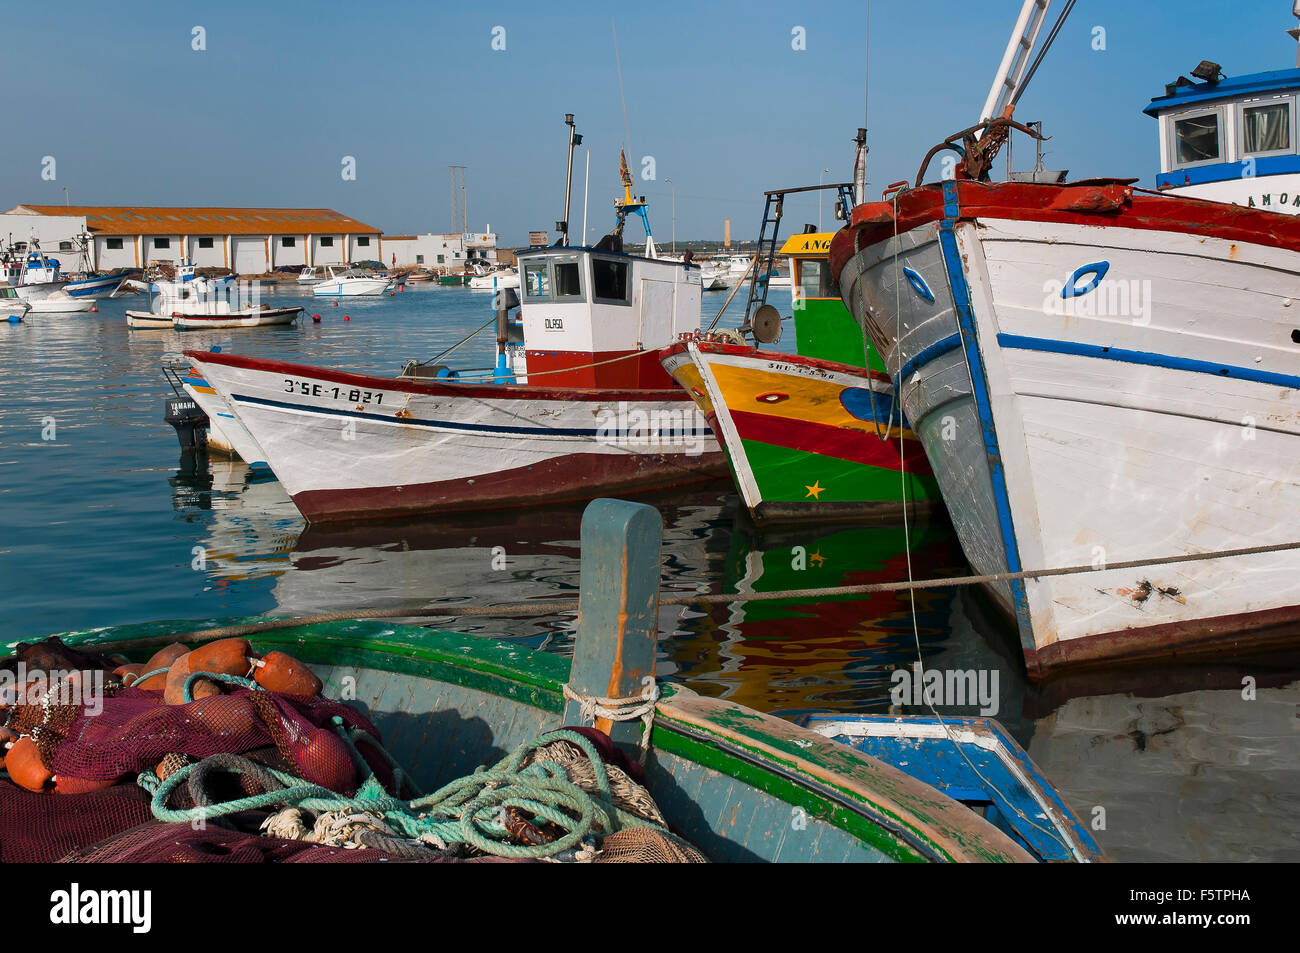 Port de pêche, Isla Cristina, province de Huelva, Andalousie, Espagne, Europe Banque D'Images